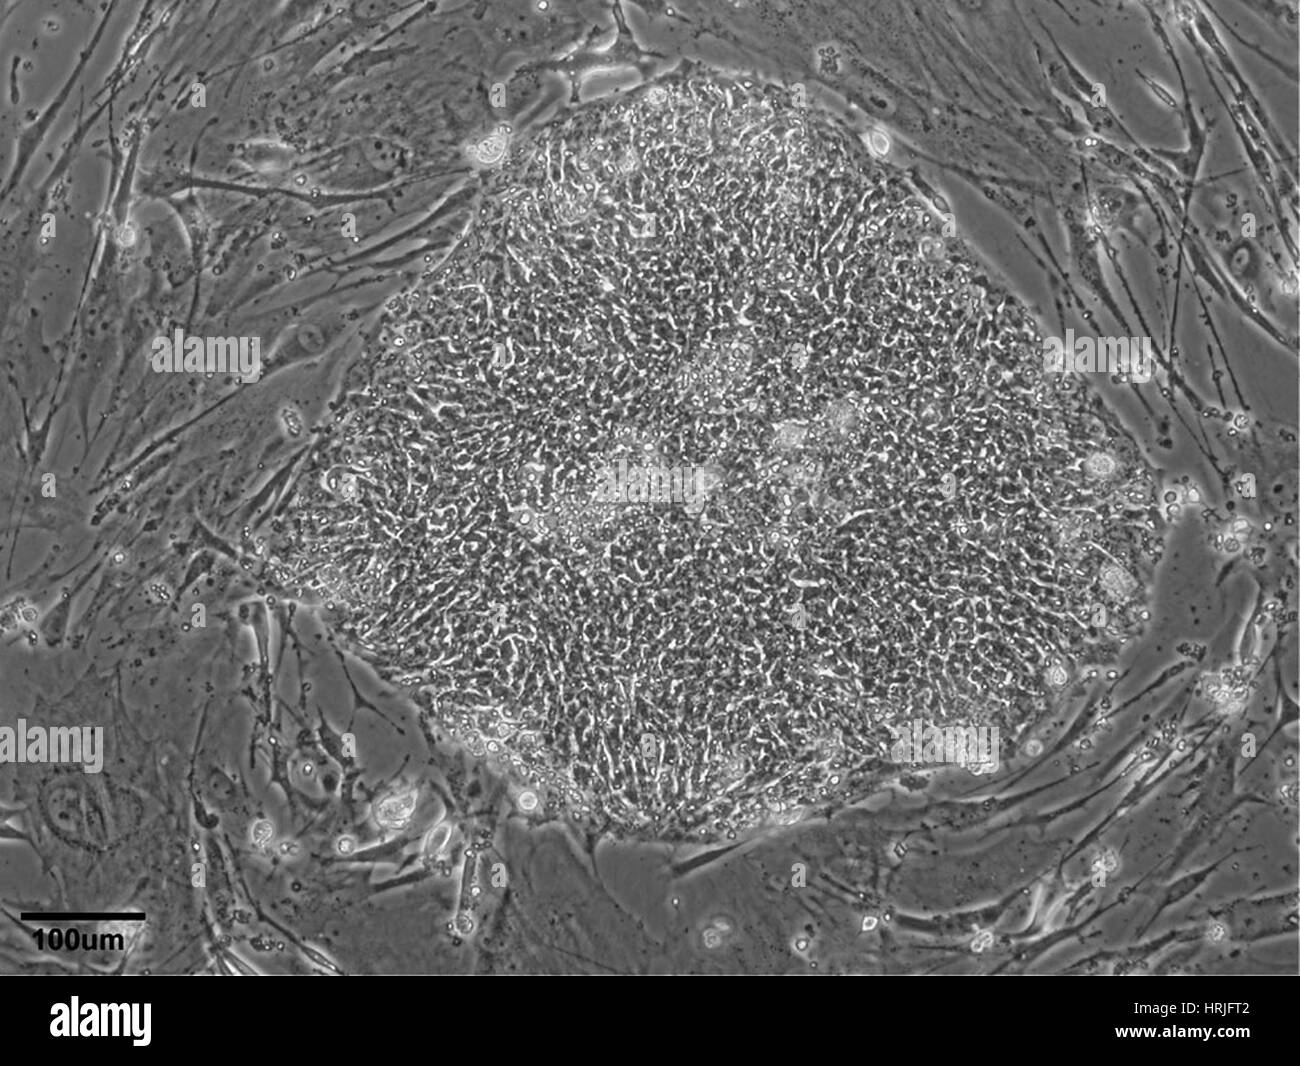 Human Embryonic Stem Cell Line WA09 Stock Photo